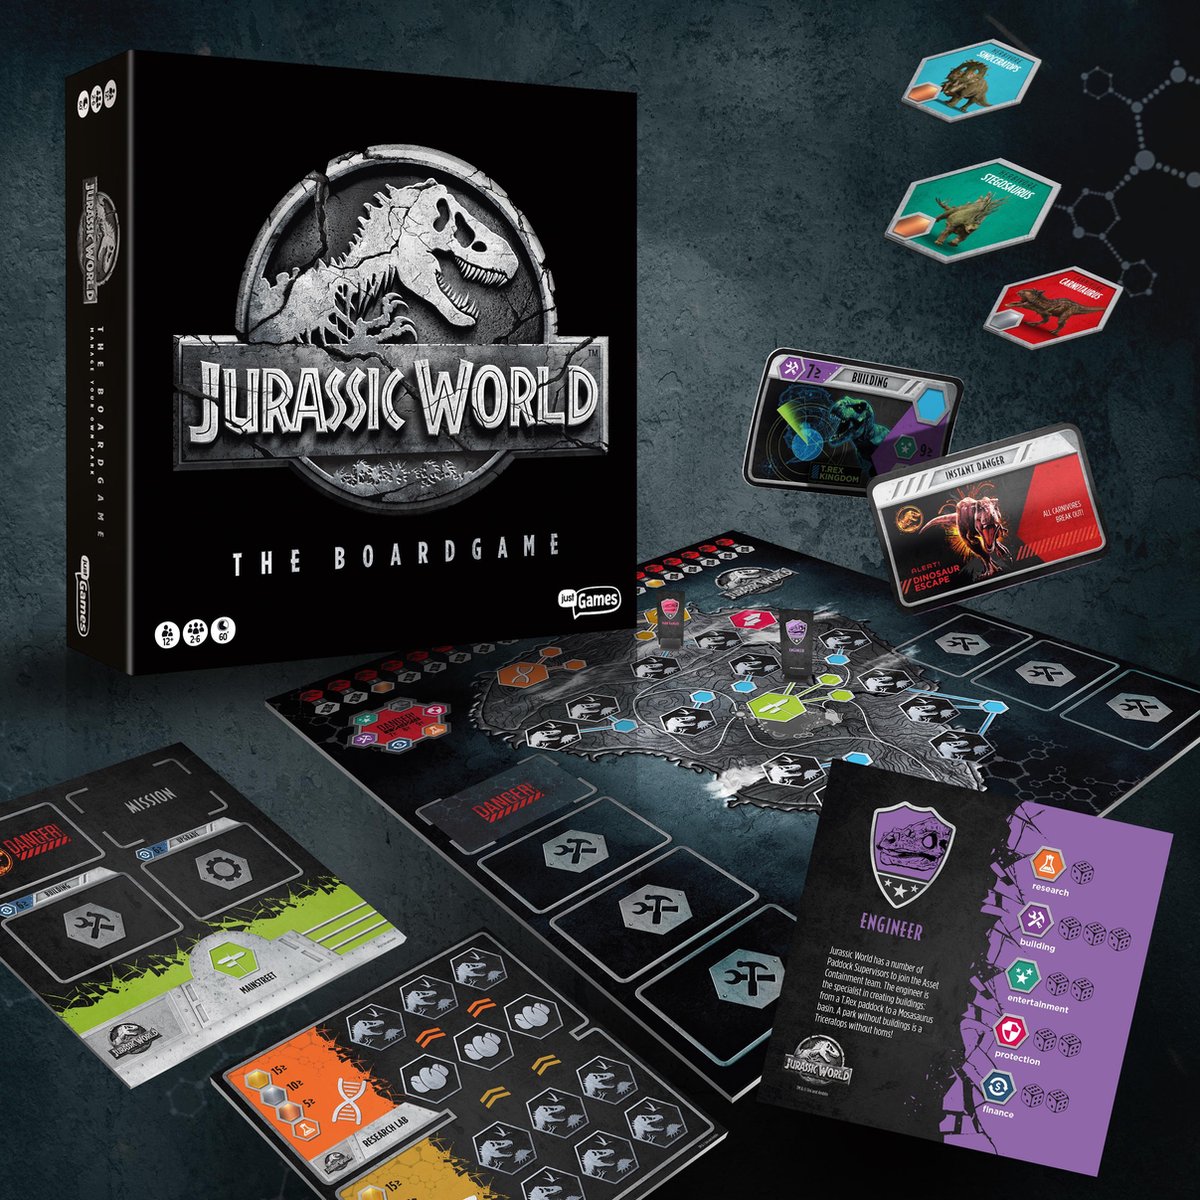 vreugde bijzonder Verhoog jezelf Jurassic World: The Boardgame - Bordspel | Games | bol.com